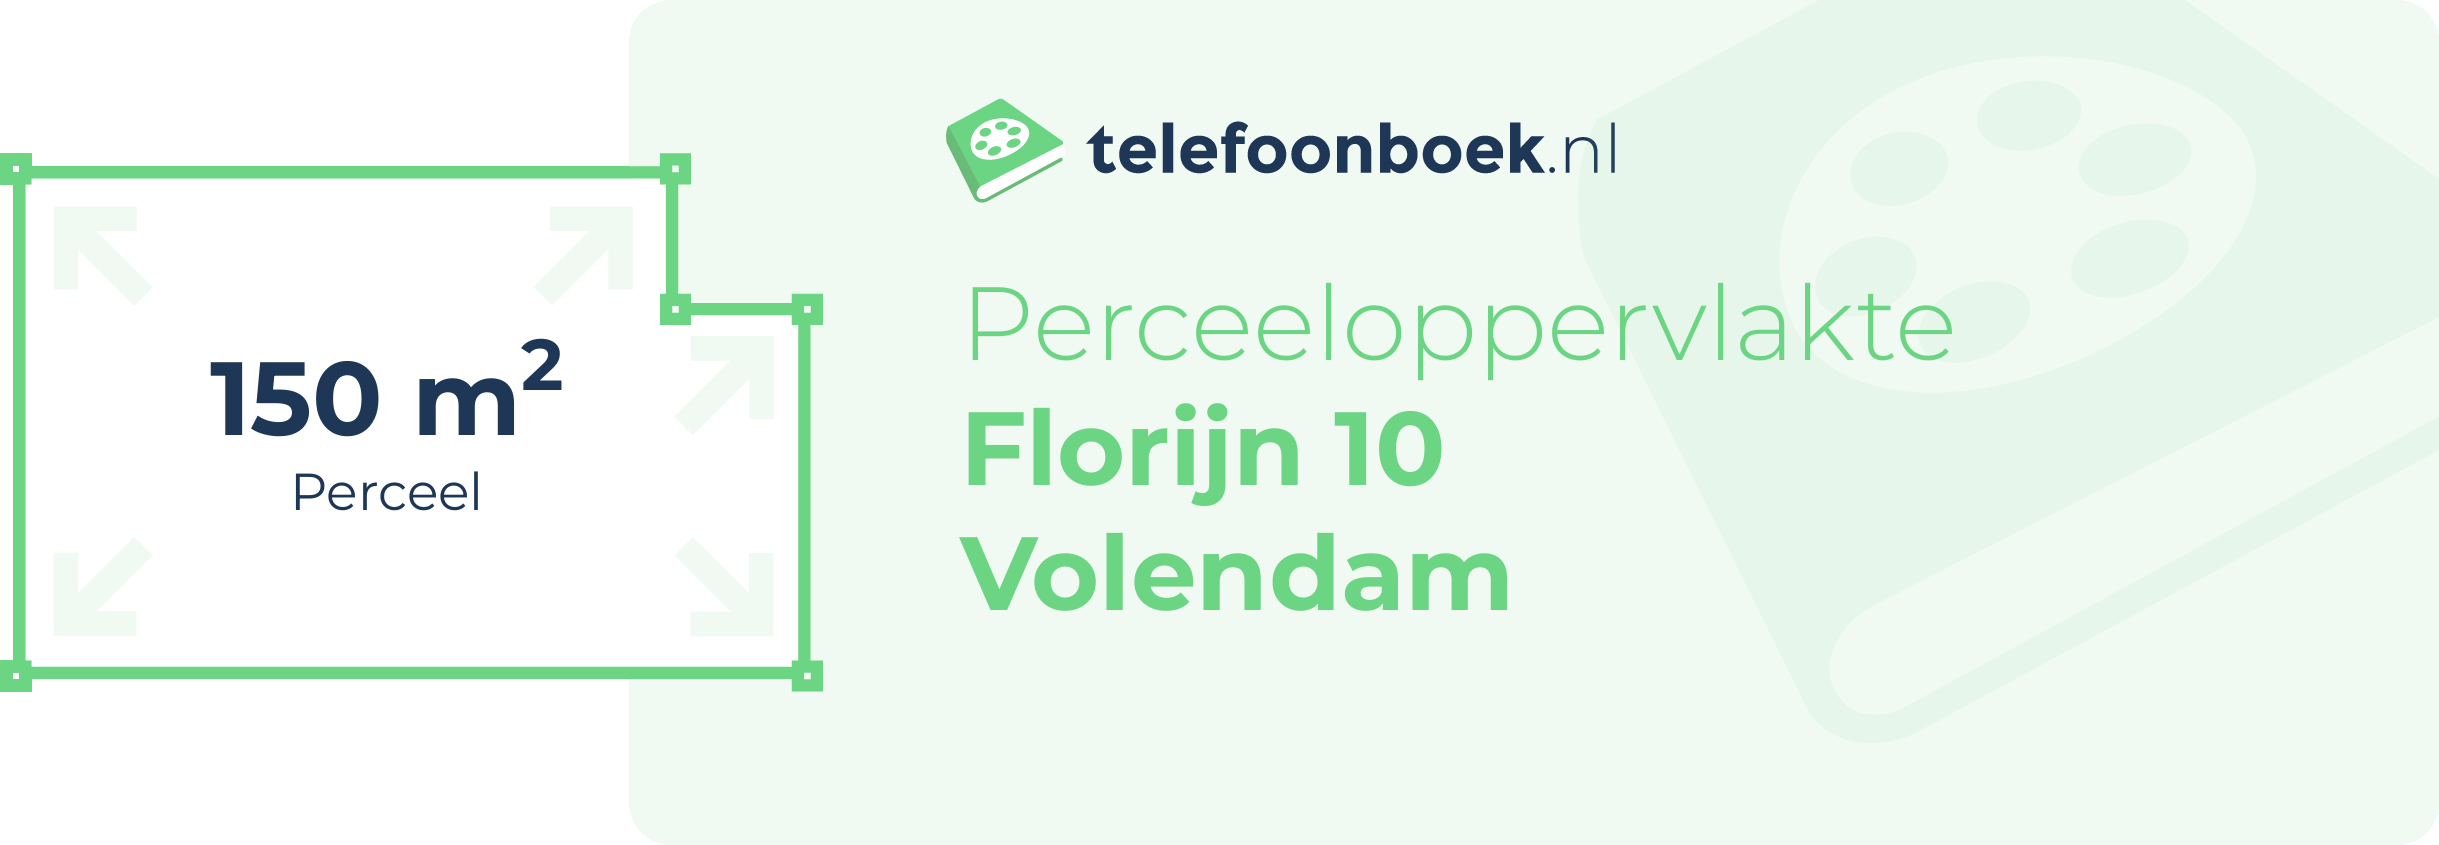 Perceeloppervlakte Florijn 10 Volendam